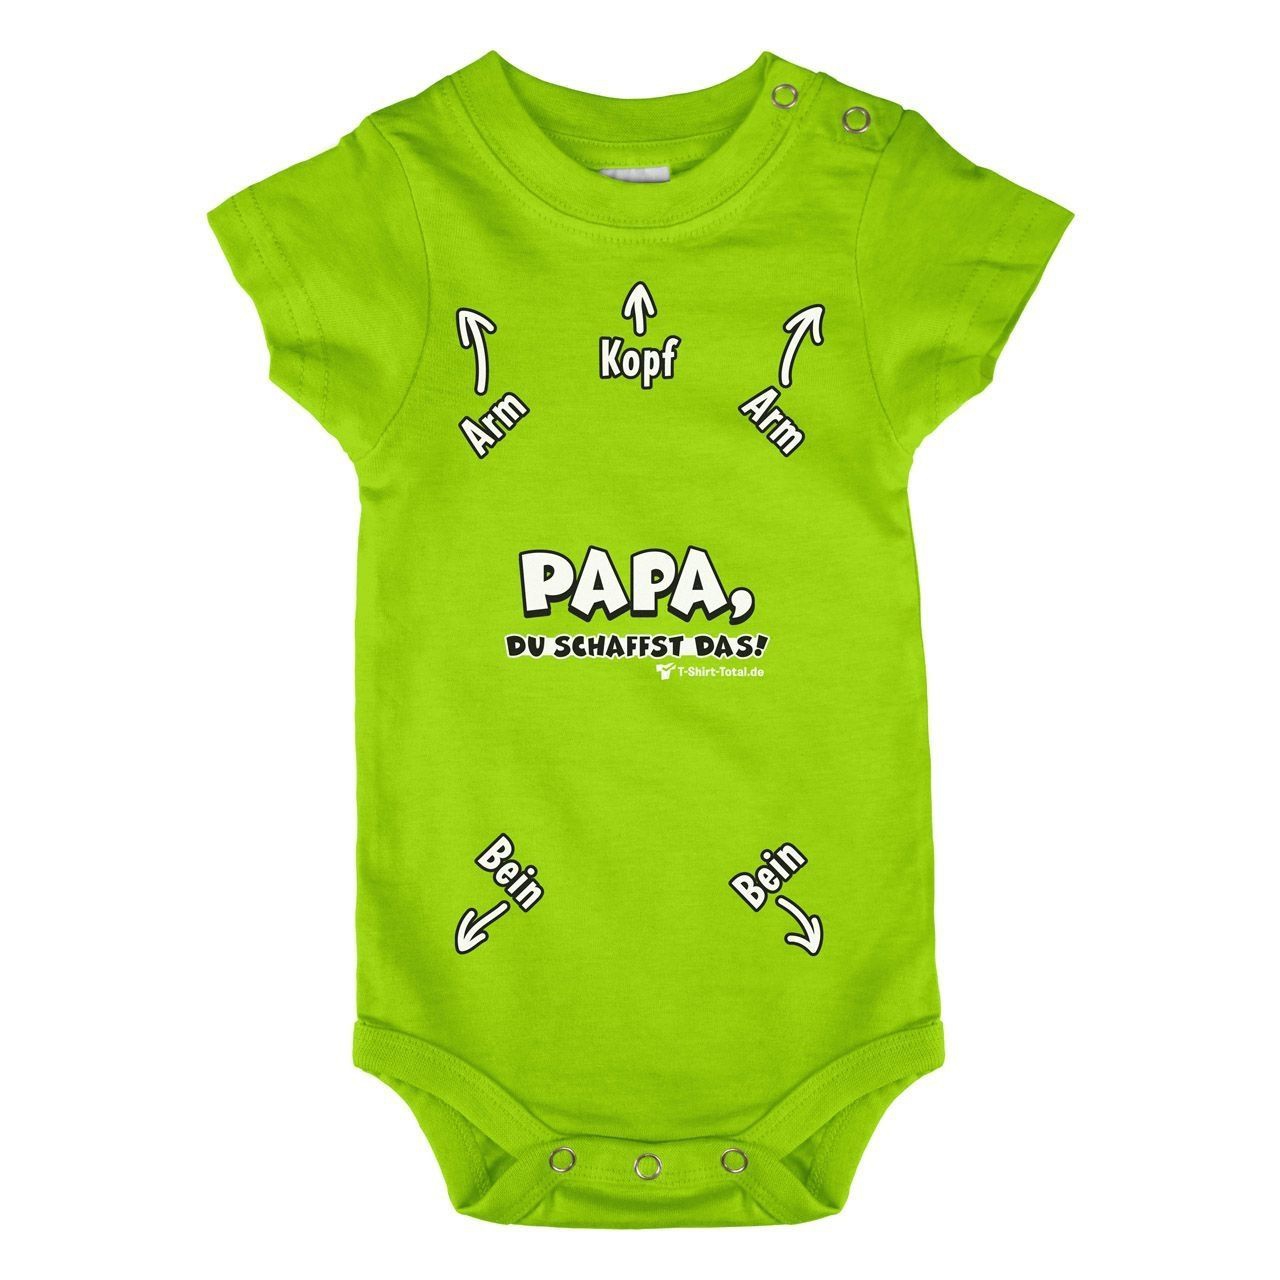 Papa du schaffst das Baby Body Kurzarm hellgrün 68 / 74